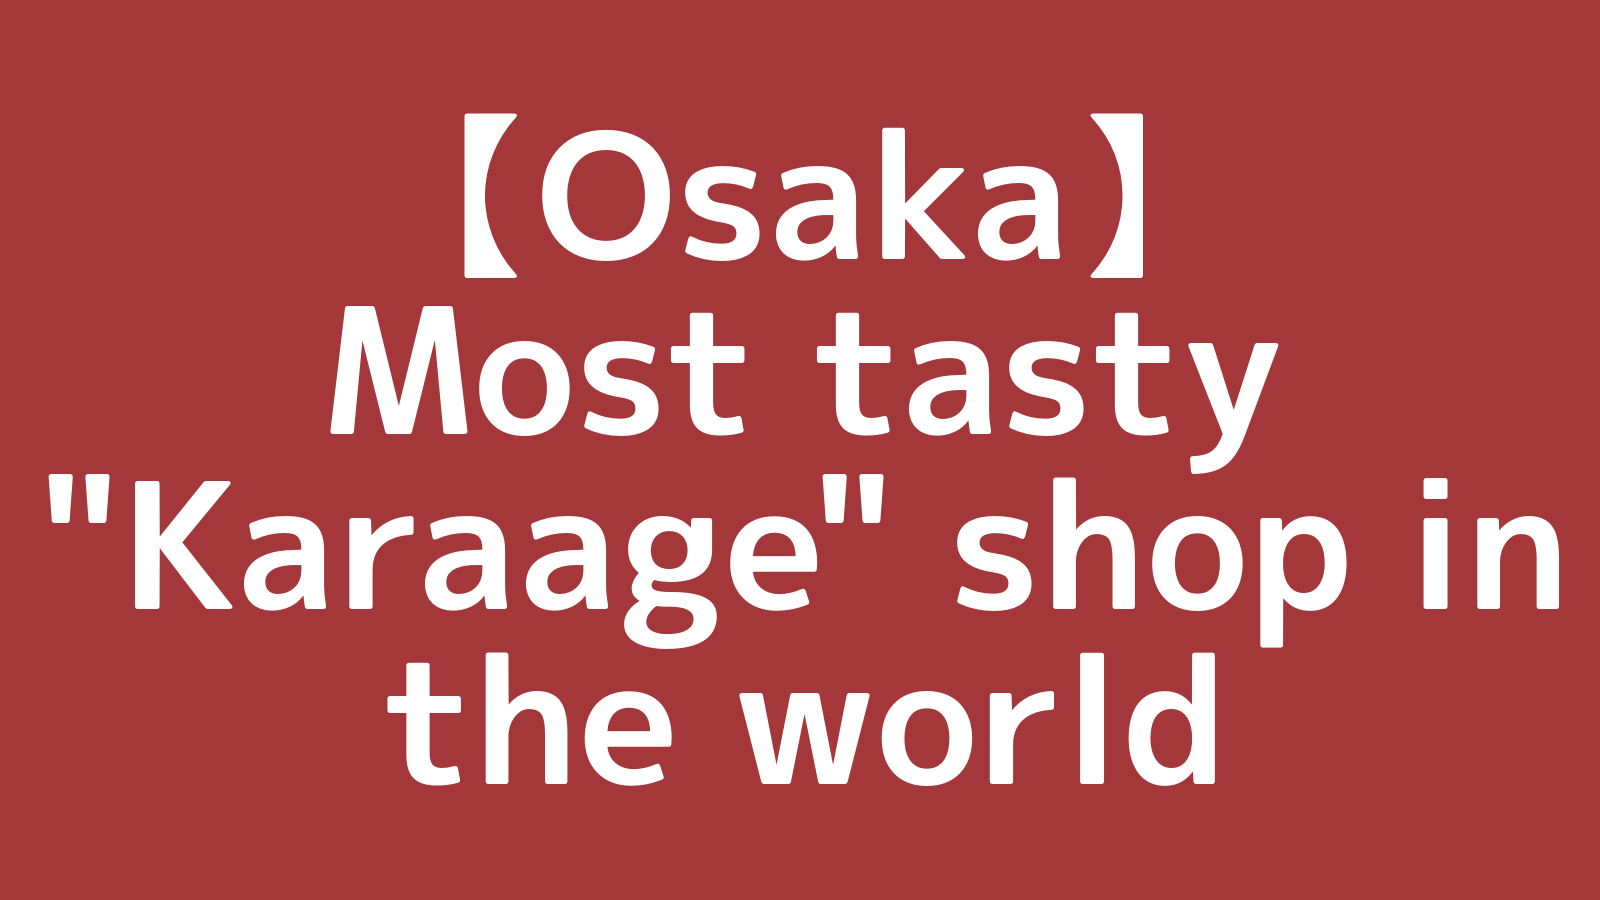 Most tasty "Karaage" shop in the world at Osaka